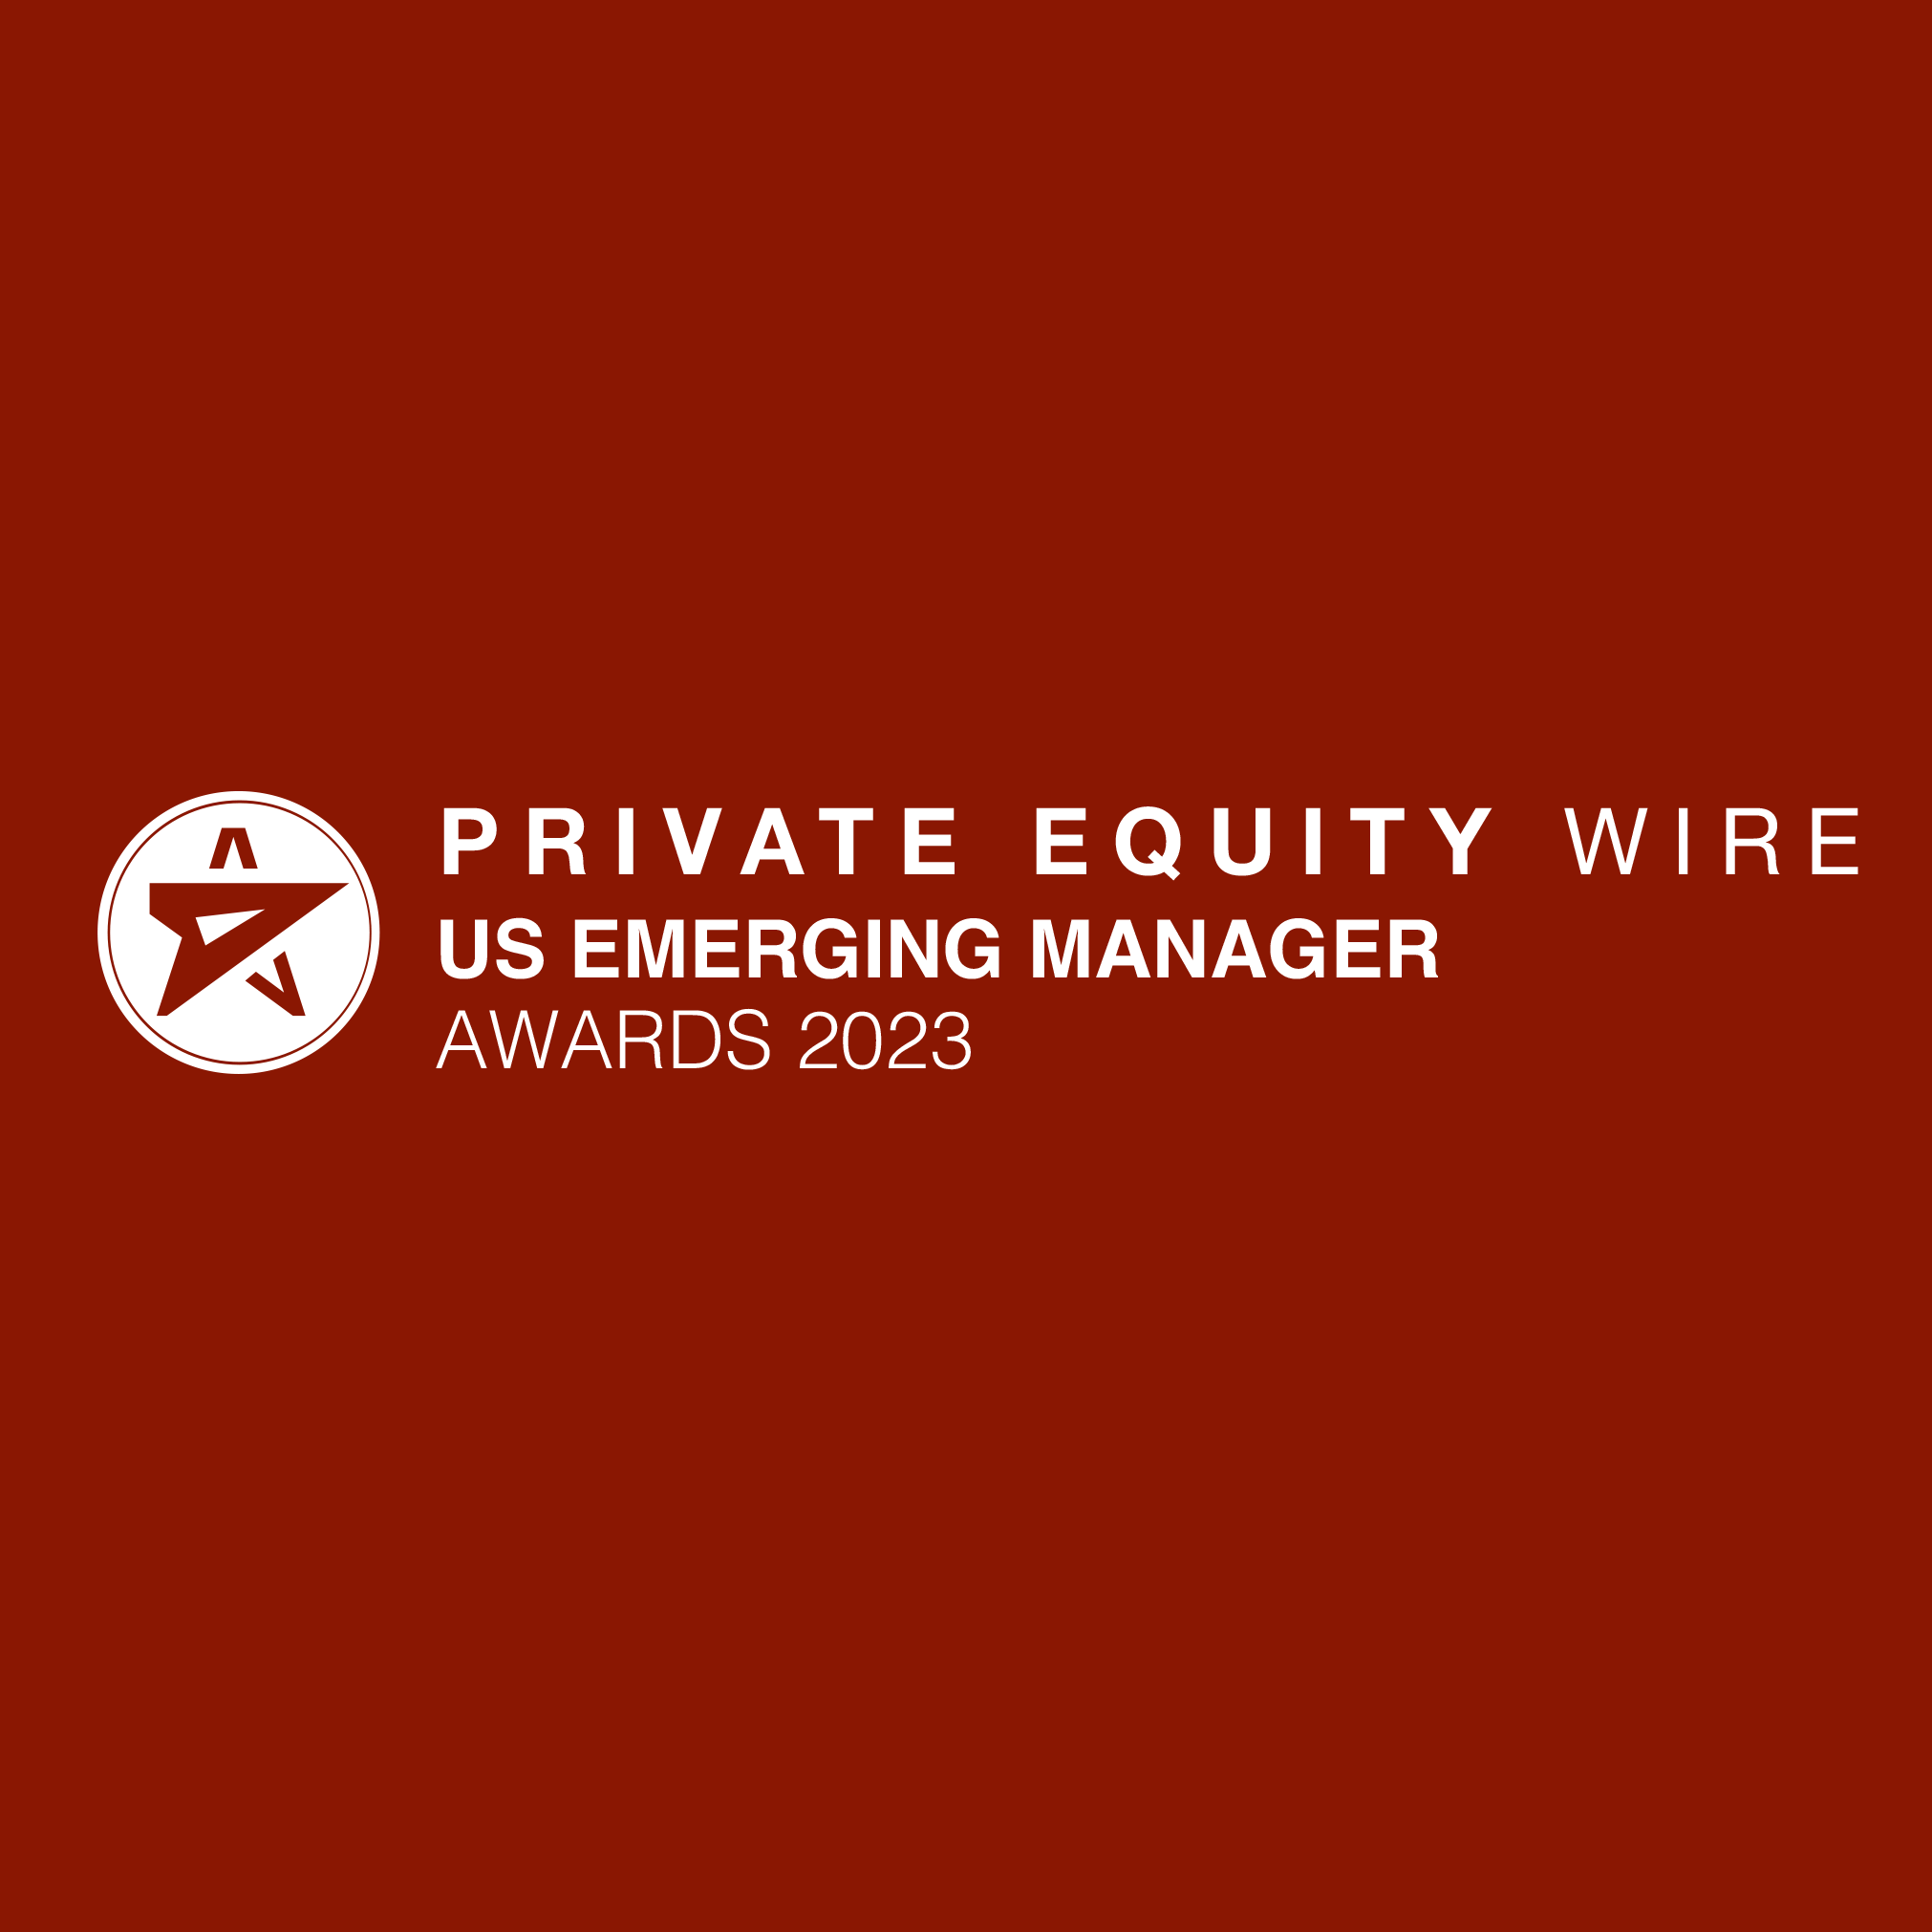 PEW US Emerging Manager Awards 2023 Logo BLOCK COLOUR.png